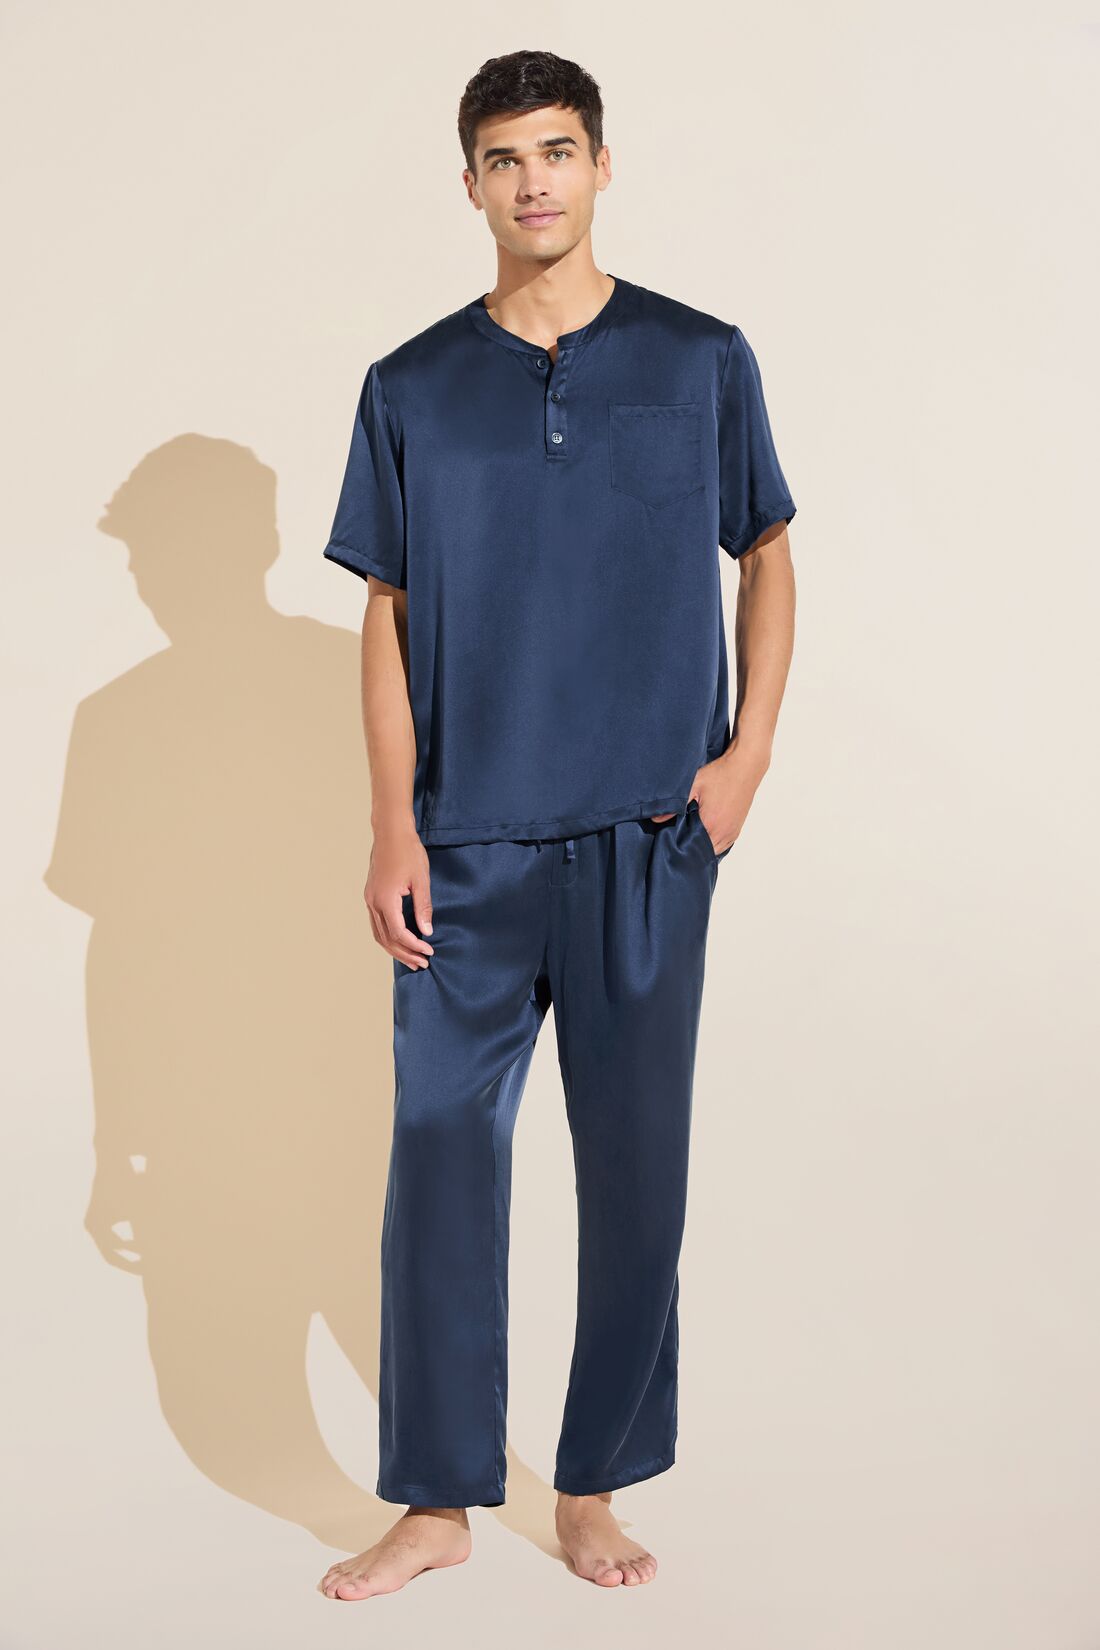 Men's Sleepwear - Washable Silk Pajamas, PJ Sets - Eberjey